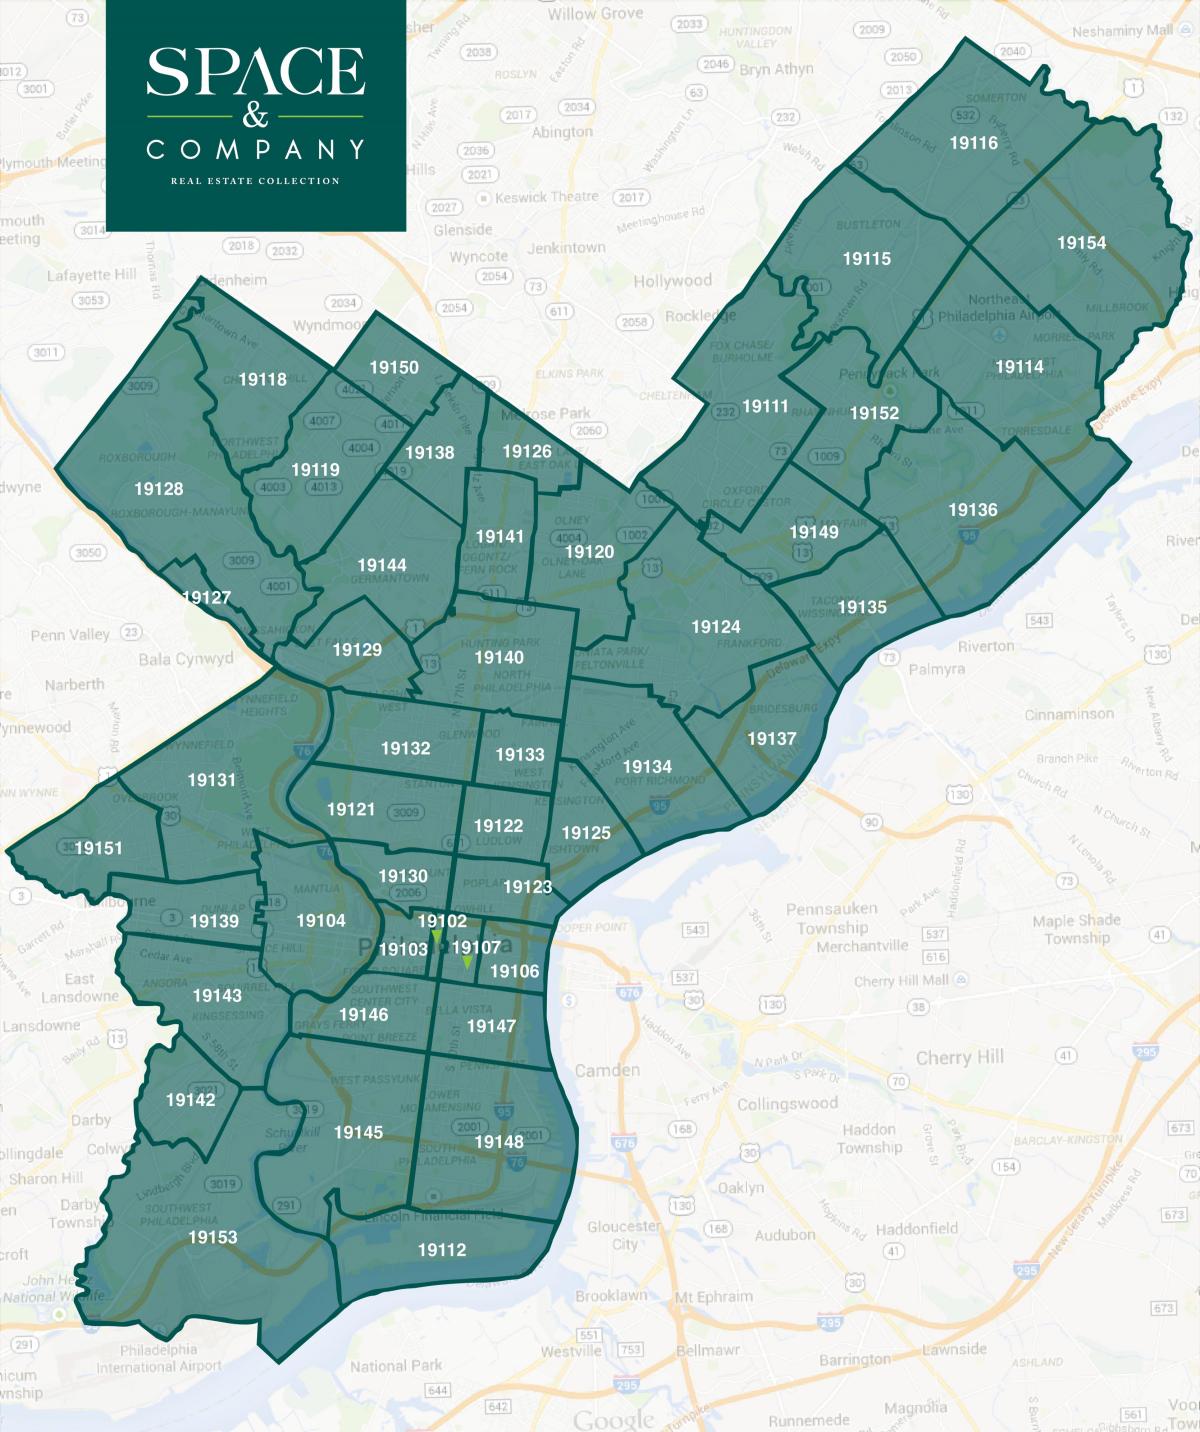 kort over Philadelphia kvarterer og postnumre